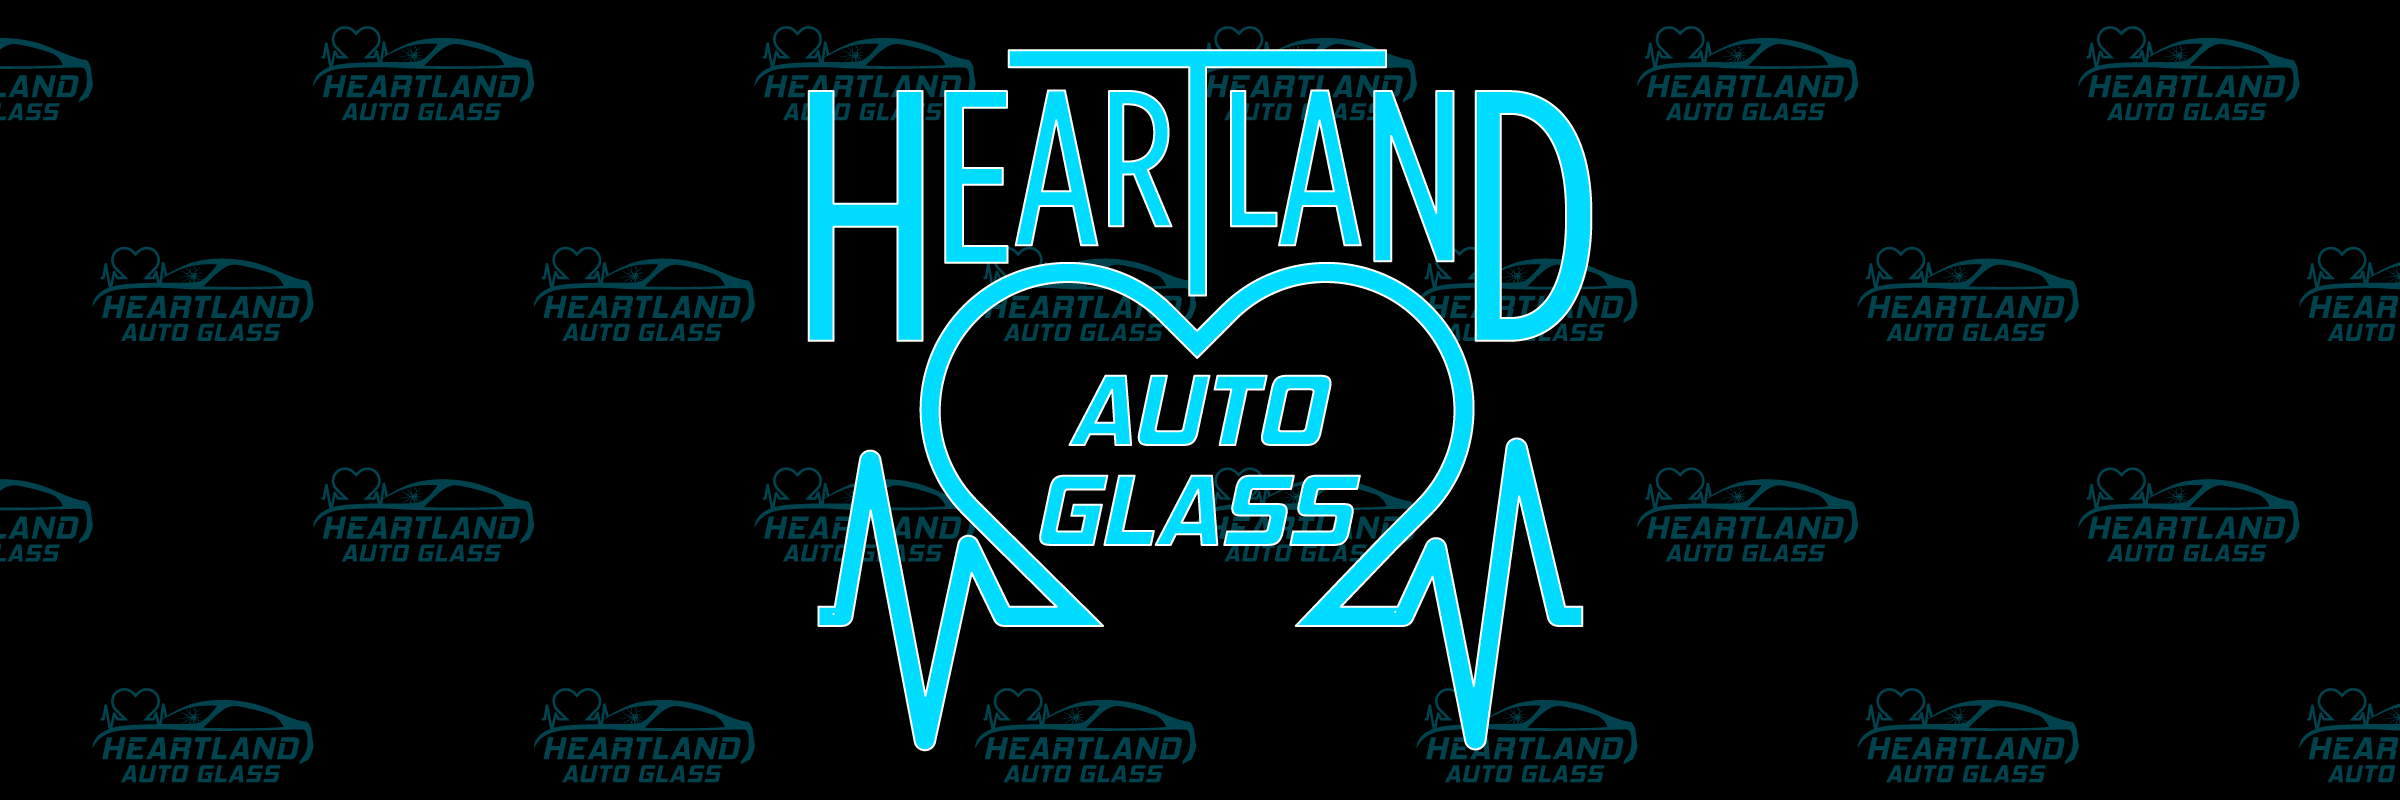 Heartland Auto Glass Logo Banner